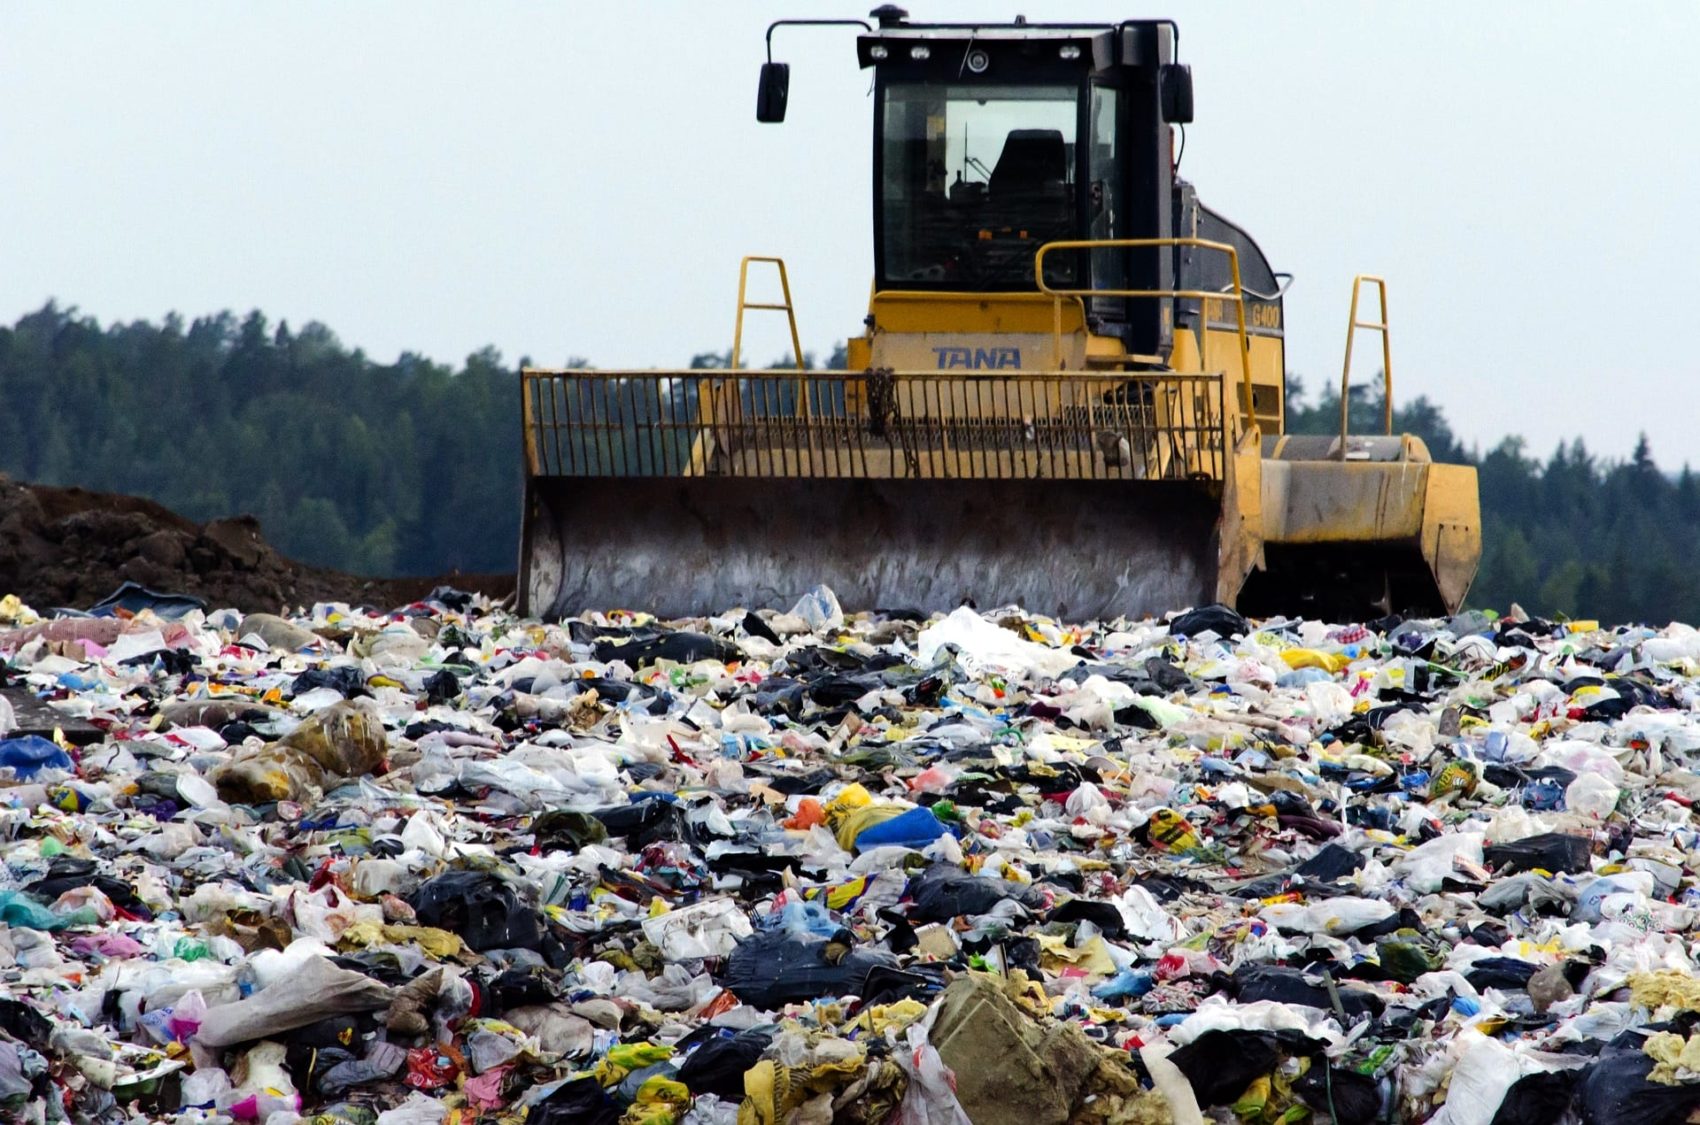 Plastik Recycling: Müll der Industrieländer flutet Asien